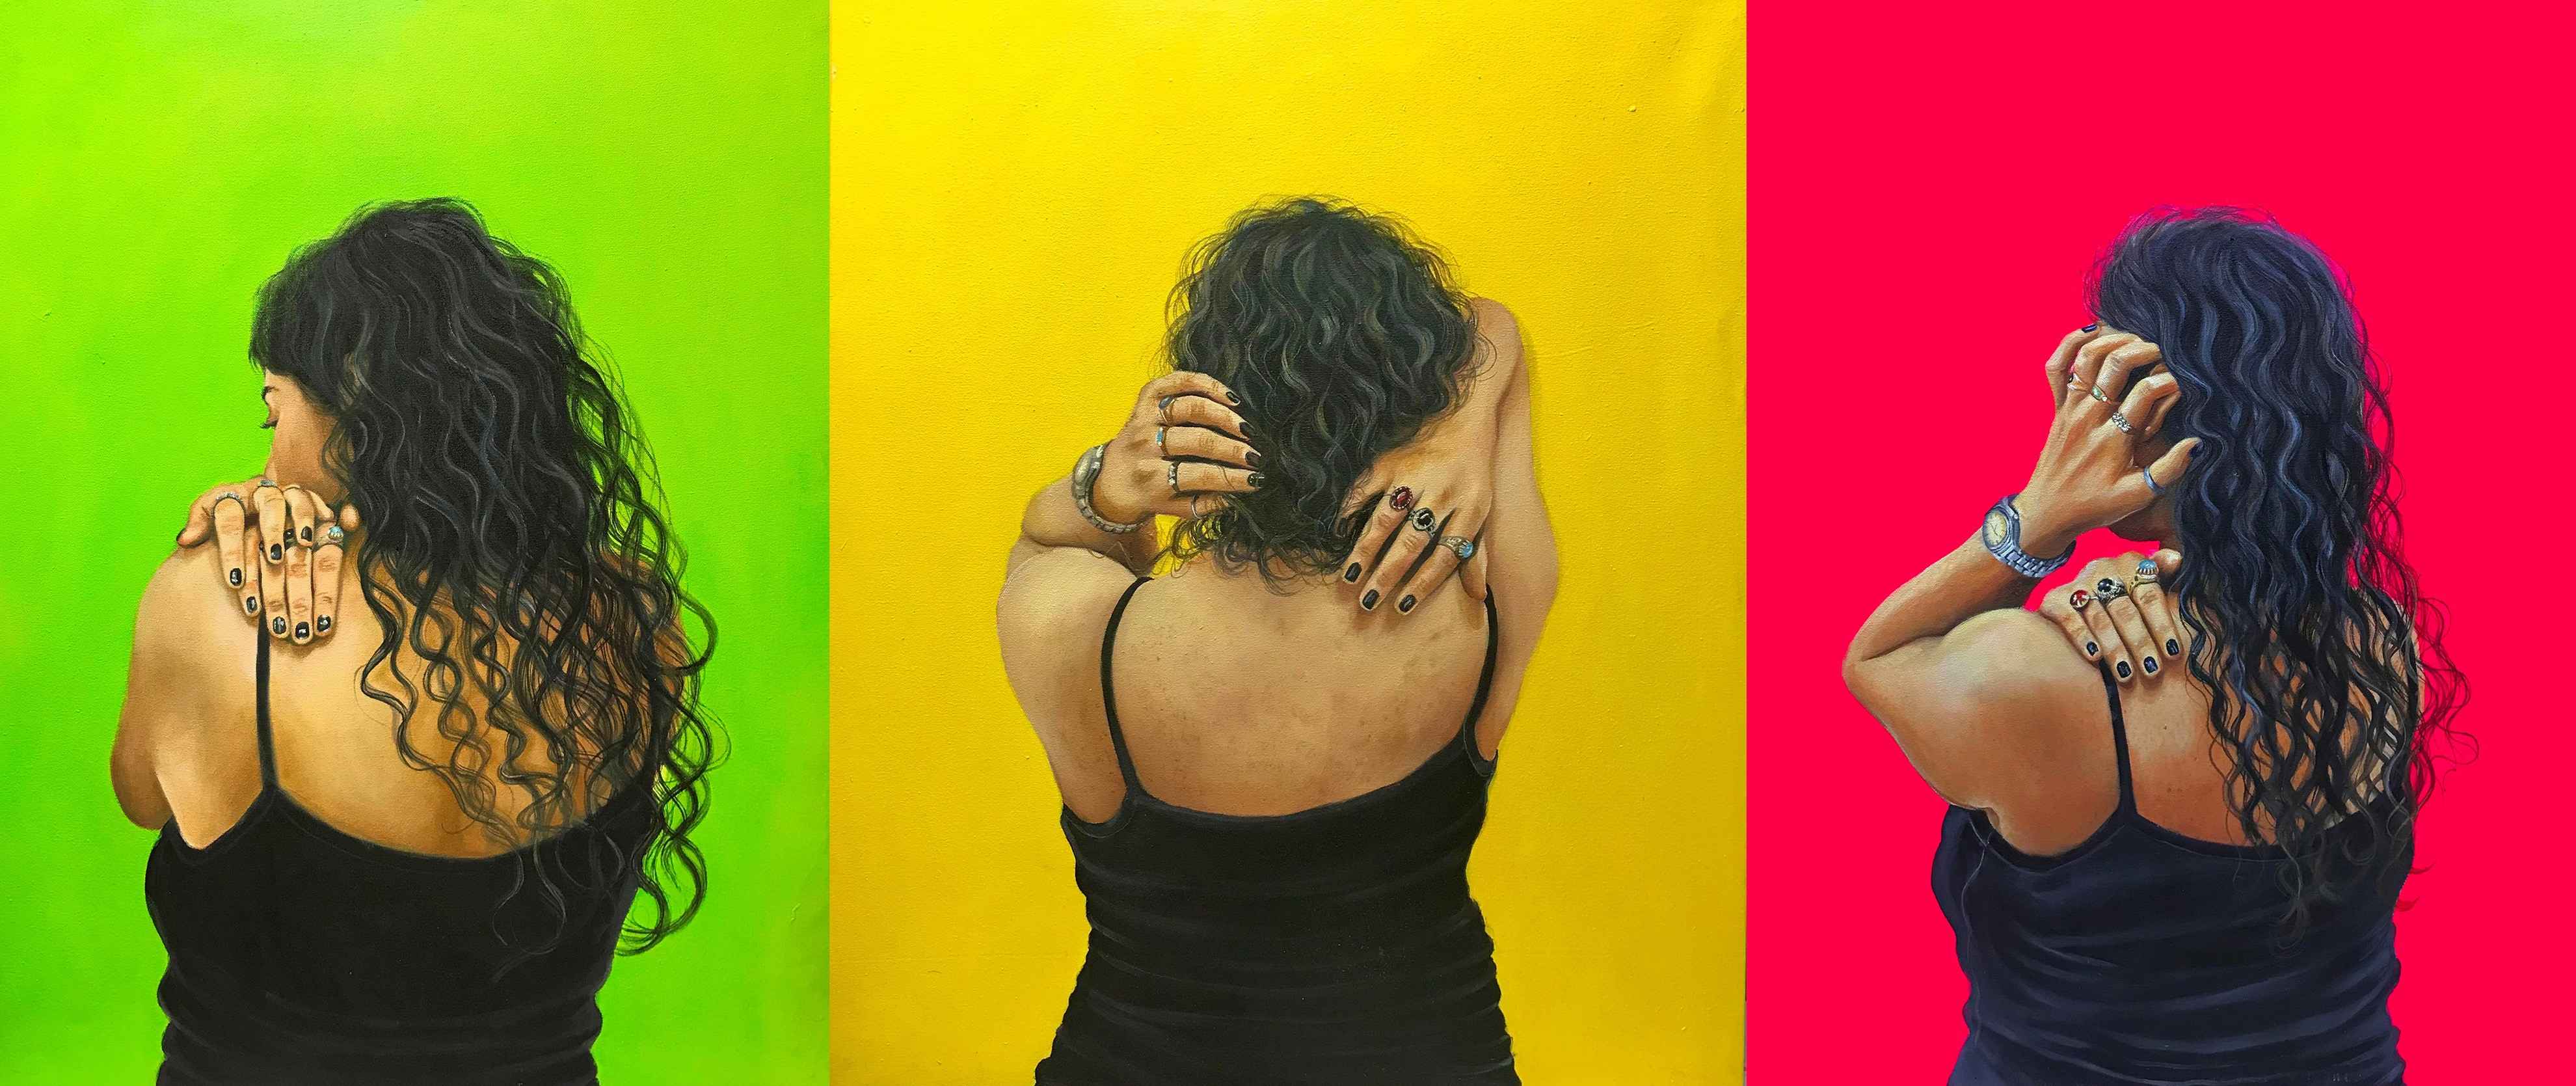 Artist:  Erum Akhtar <br> Title:  INTROSPECTION (TRIPTYCH)<br> Medium: Oil on canvas<br> Size: 30x24 inches(each)